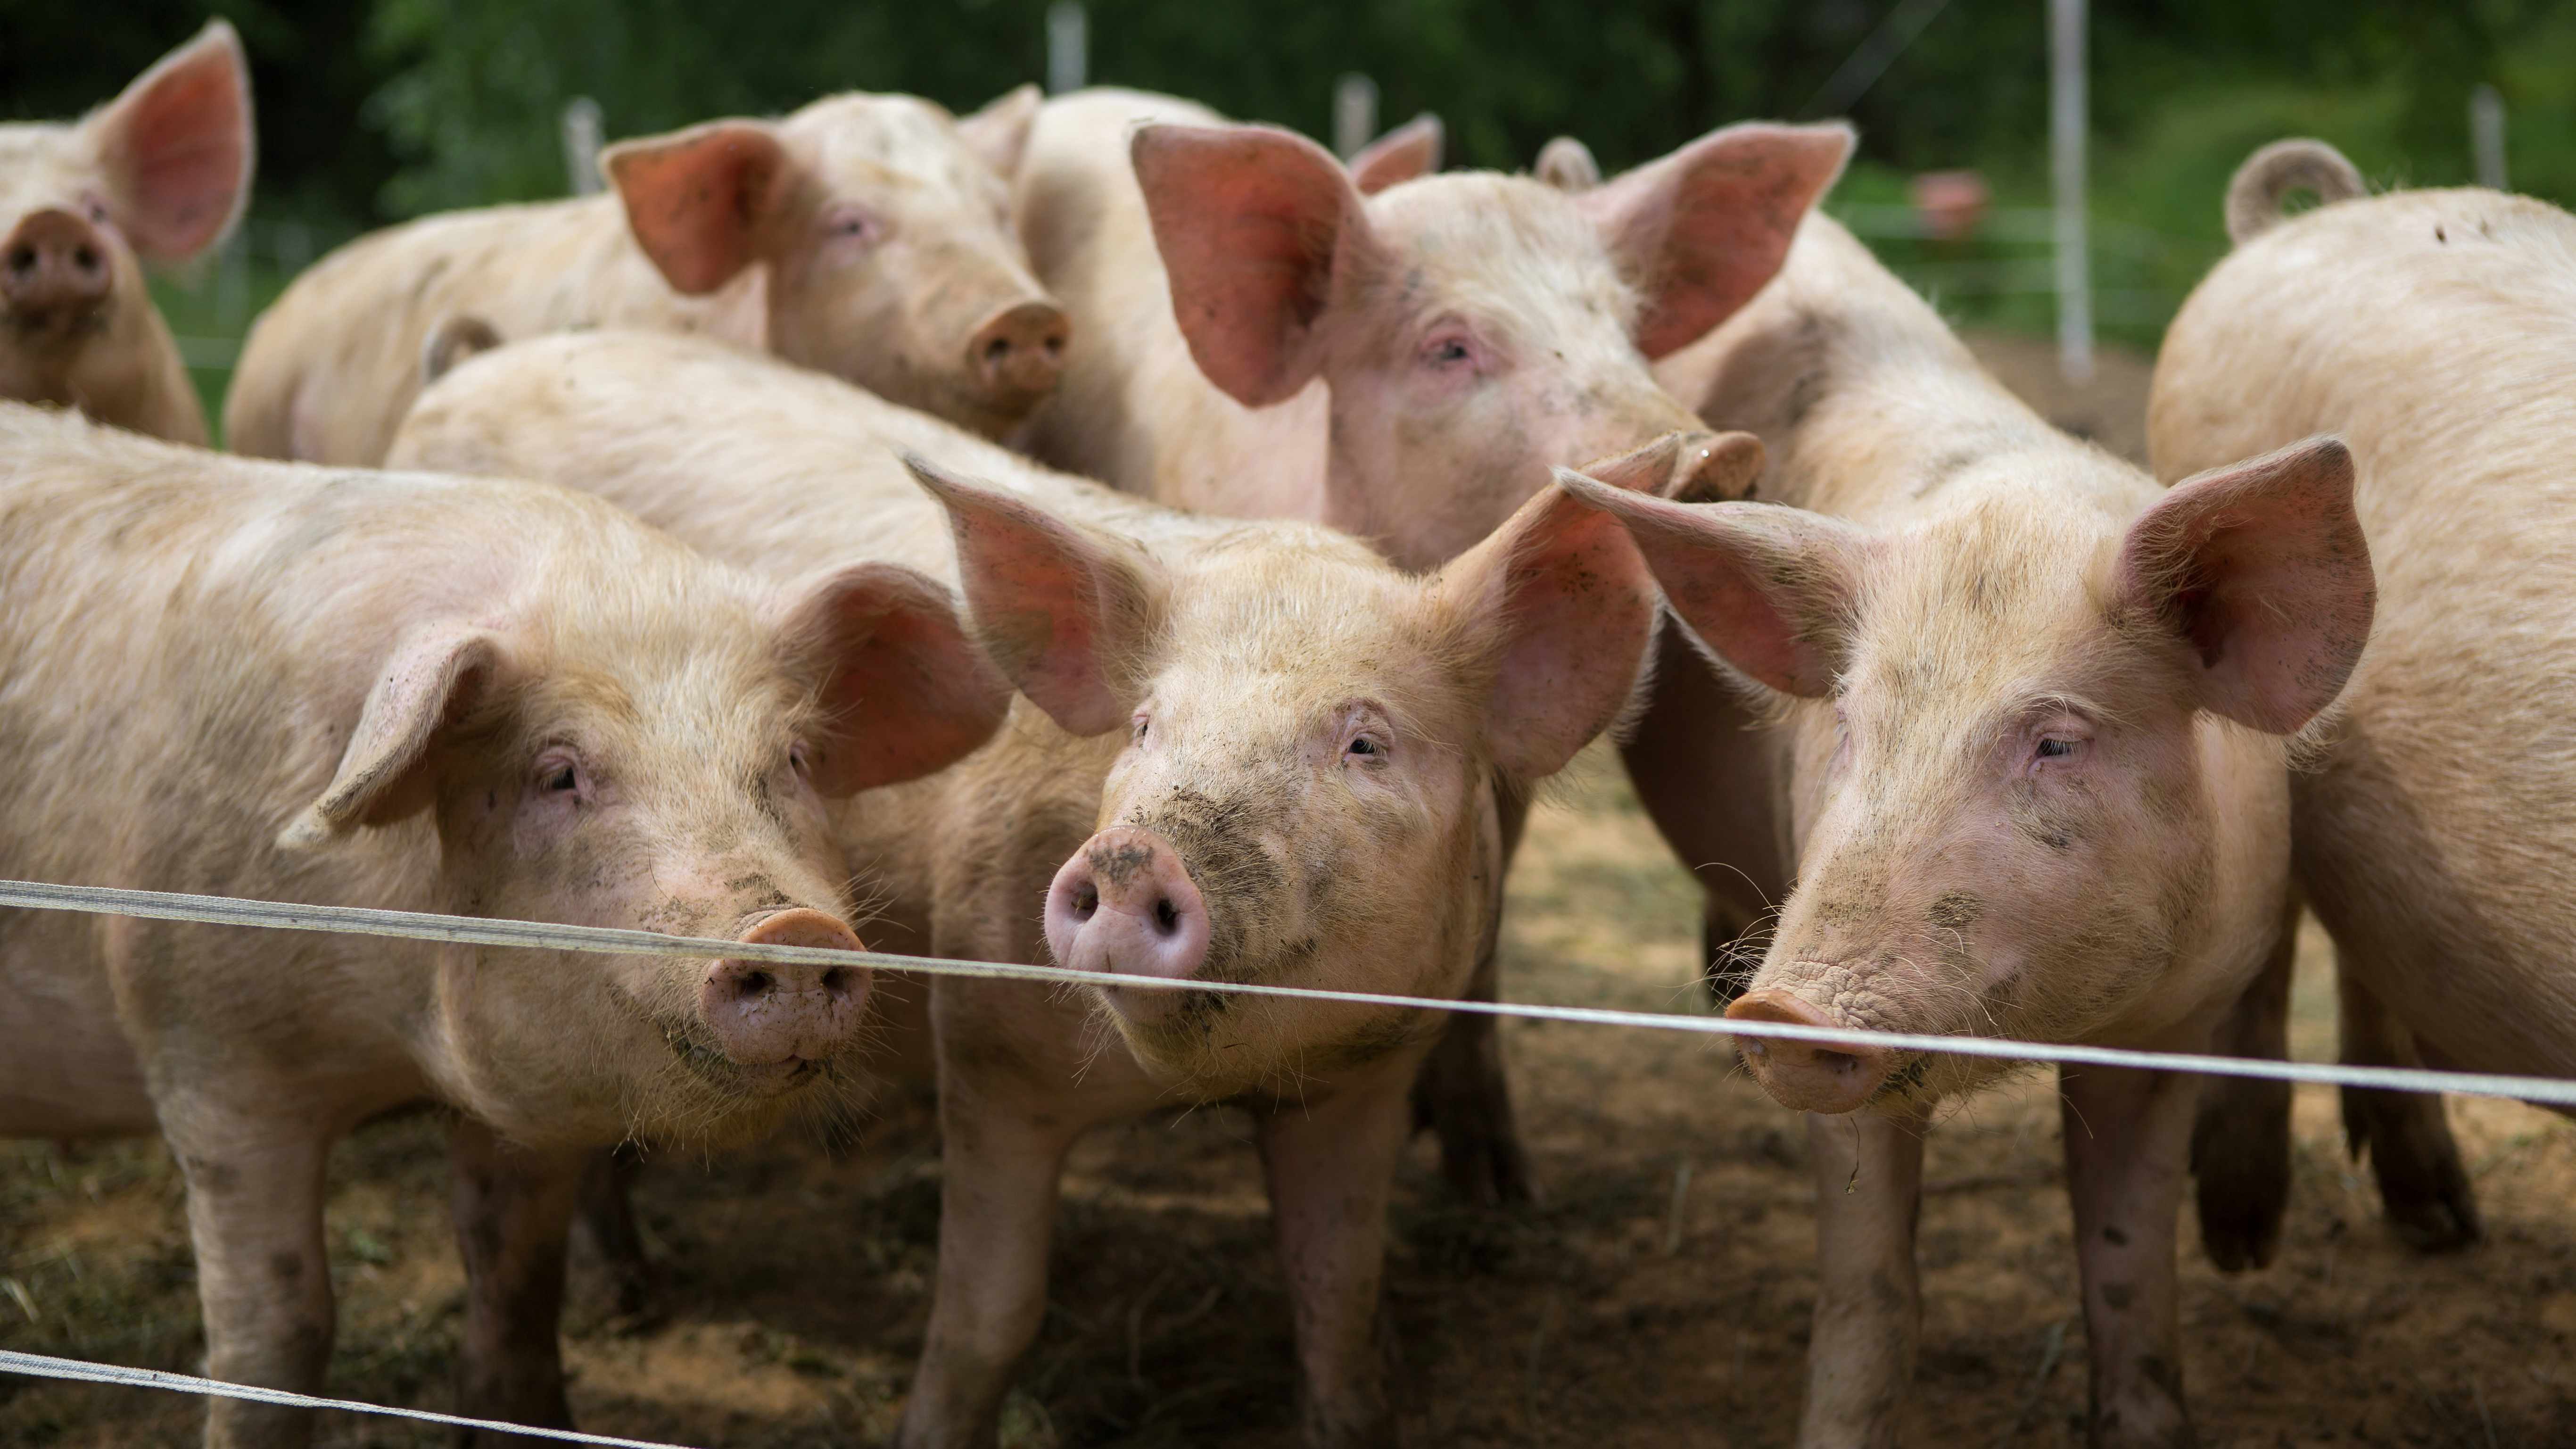 a hog pen full of pigs or swine on a farm